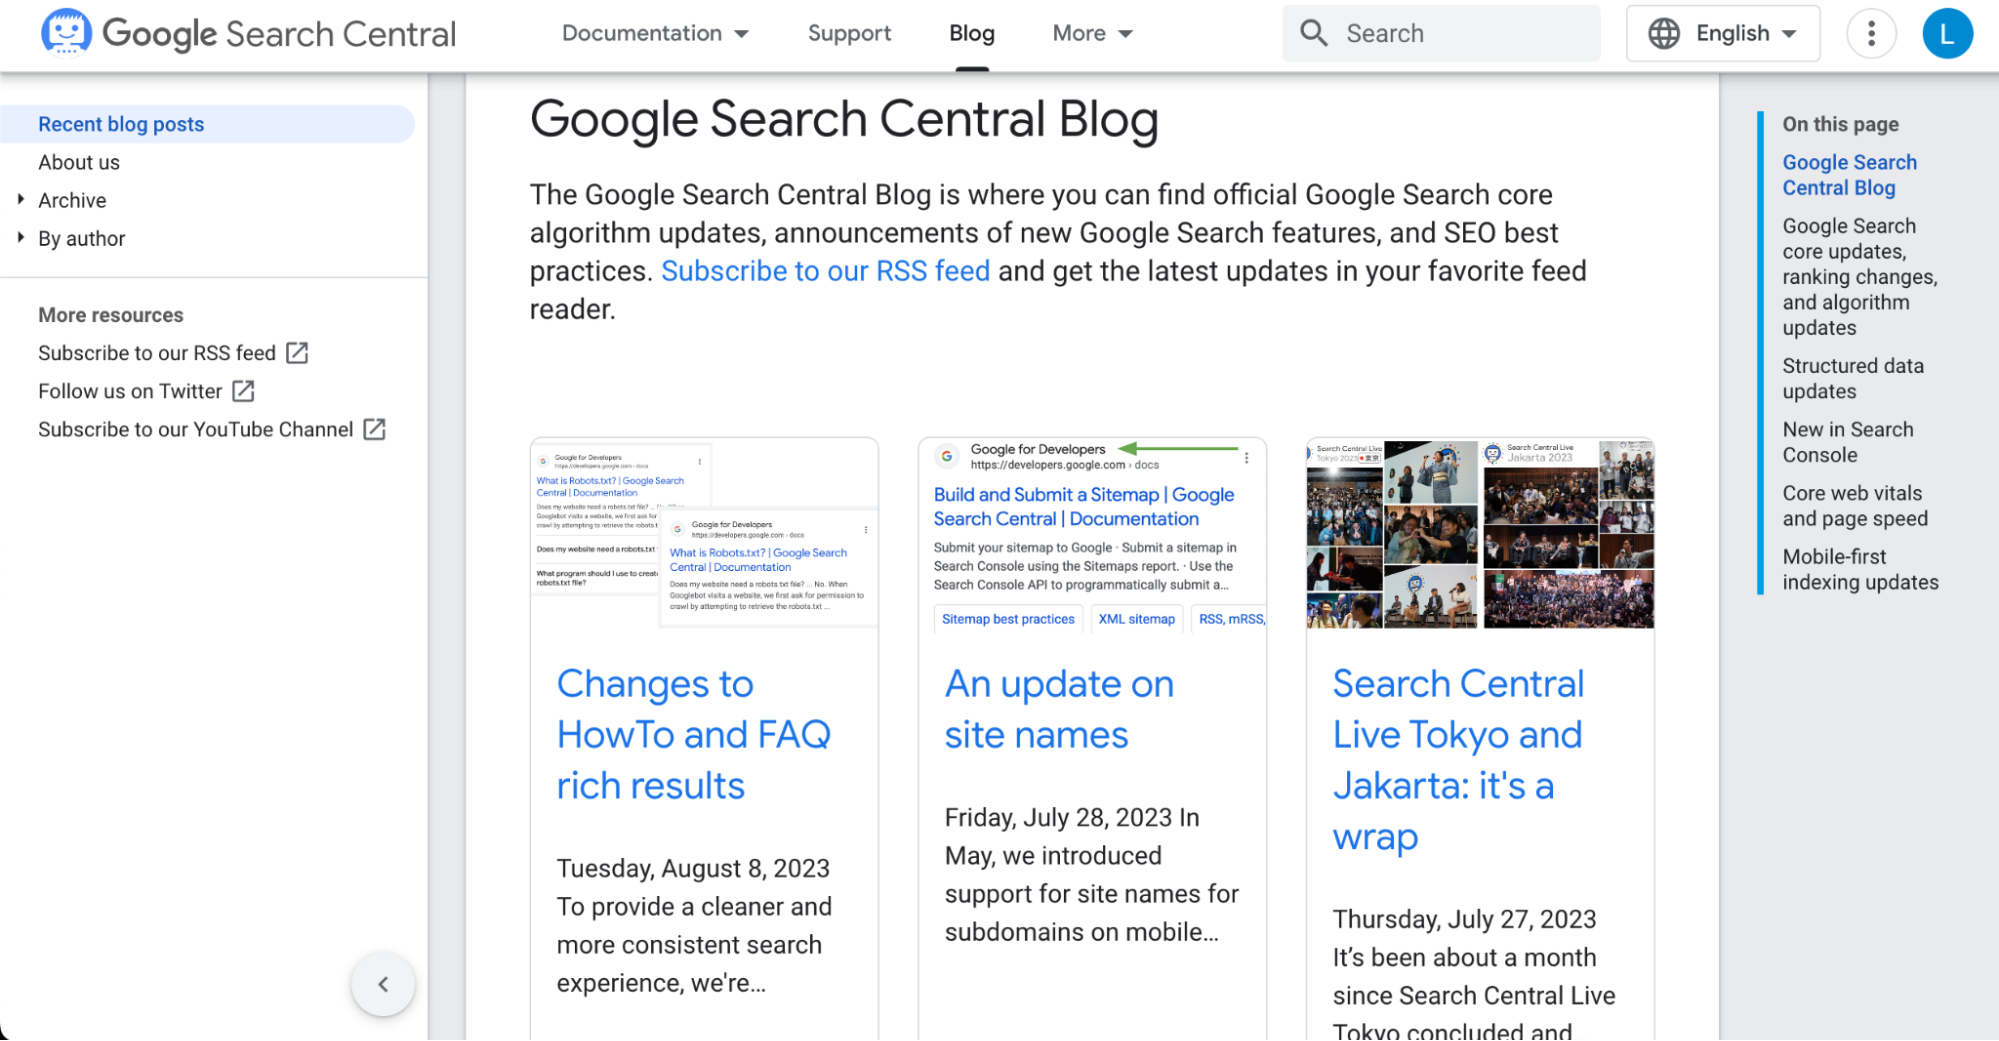 Google Search Central Blog - Ectesso 